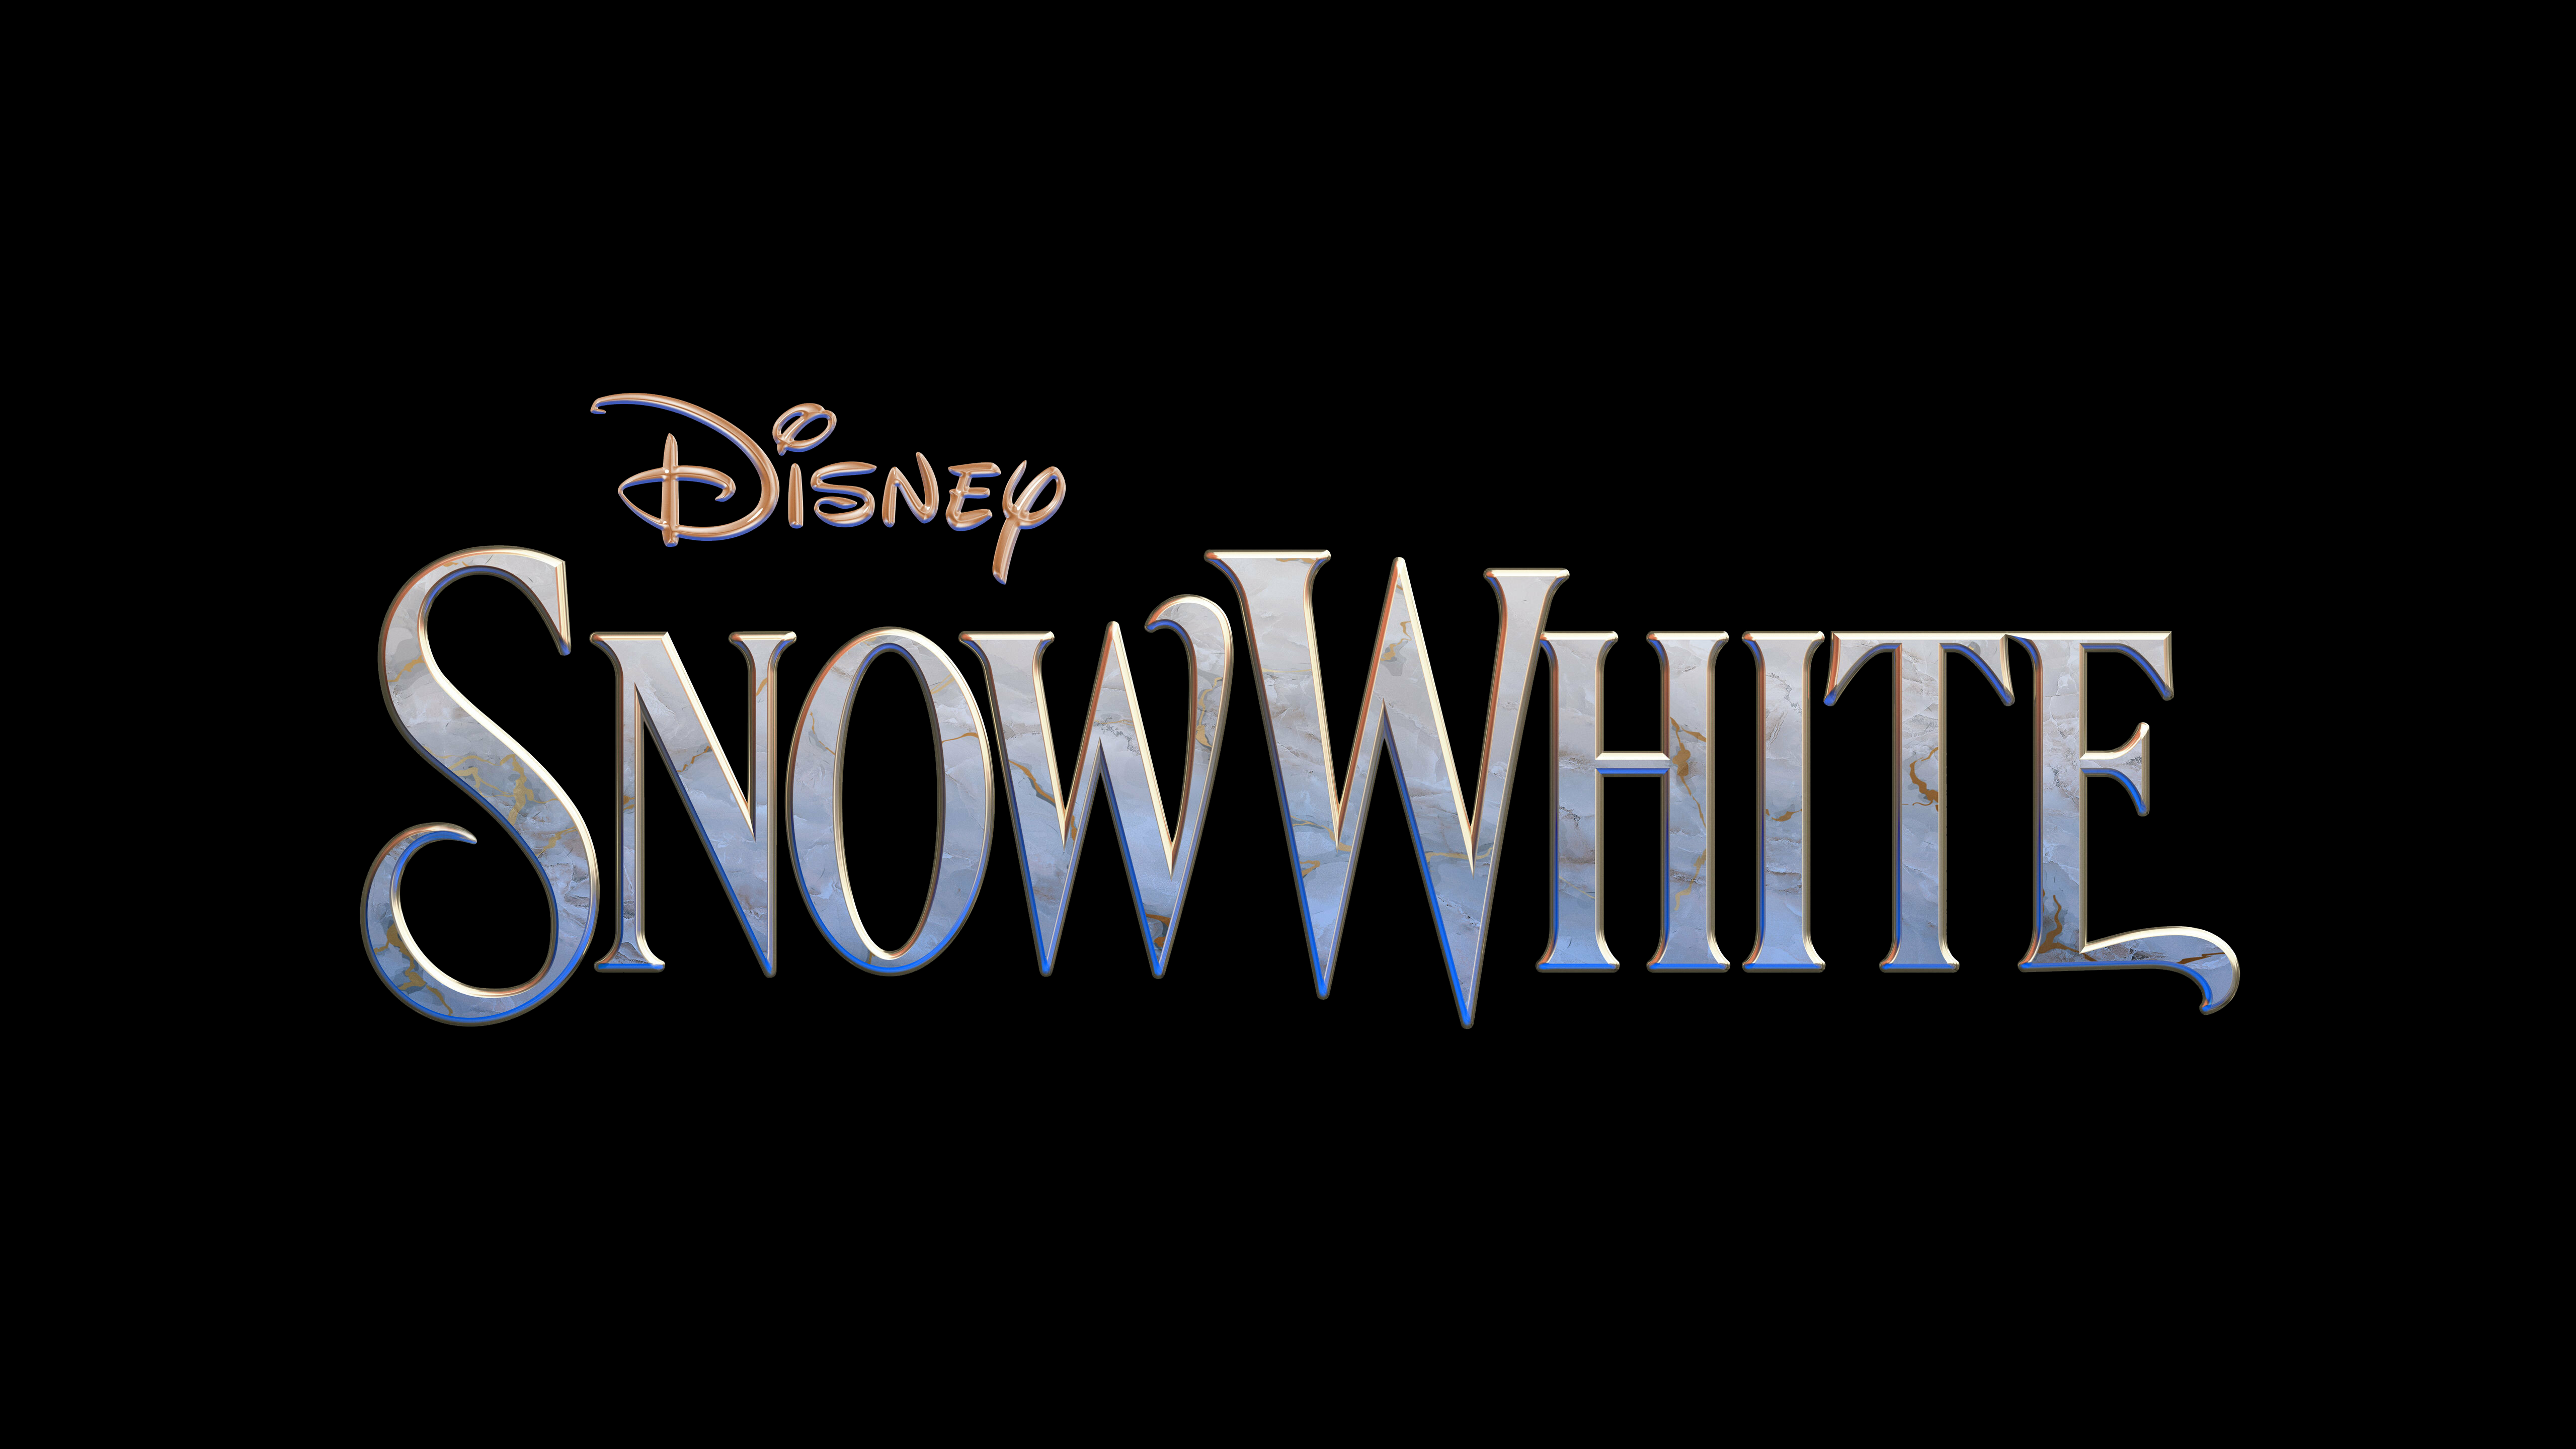 Snow White and the Seven Dwarfs Wallpaper  Disneyclipscom